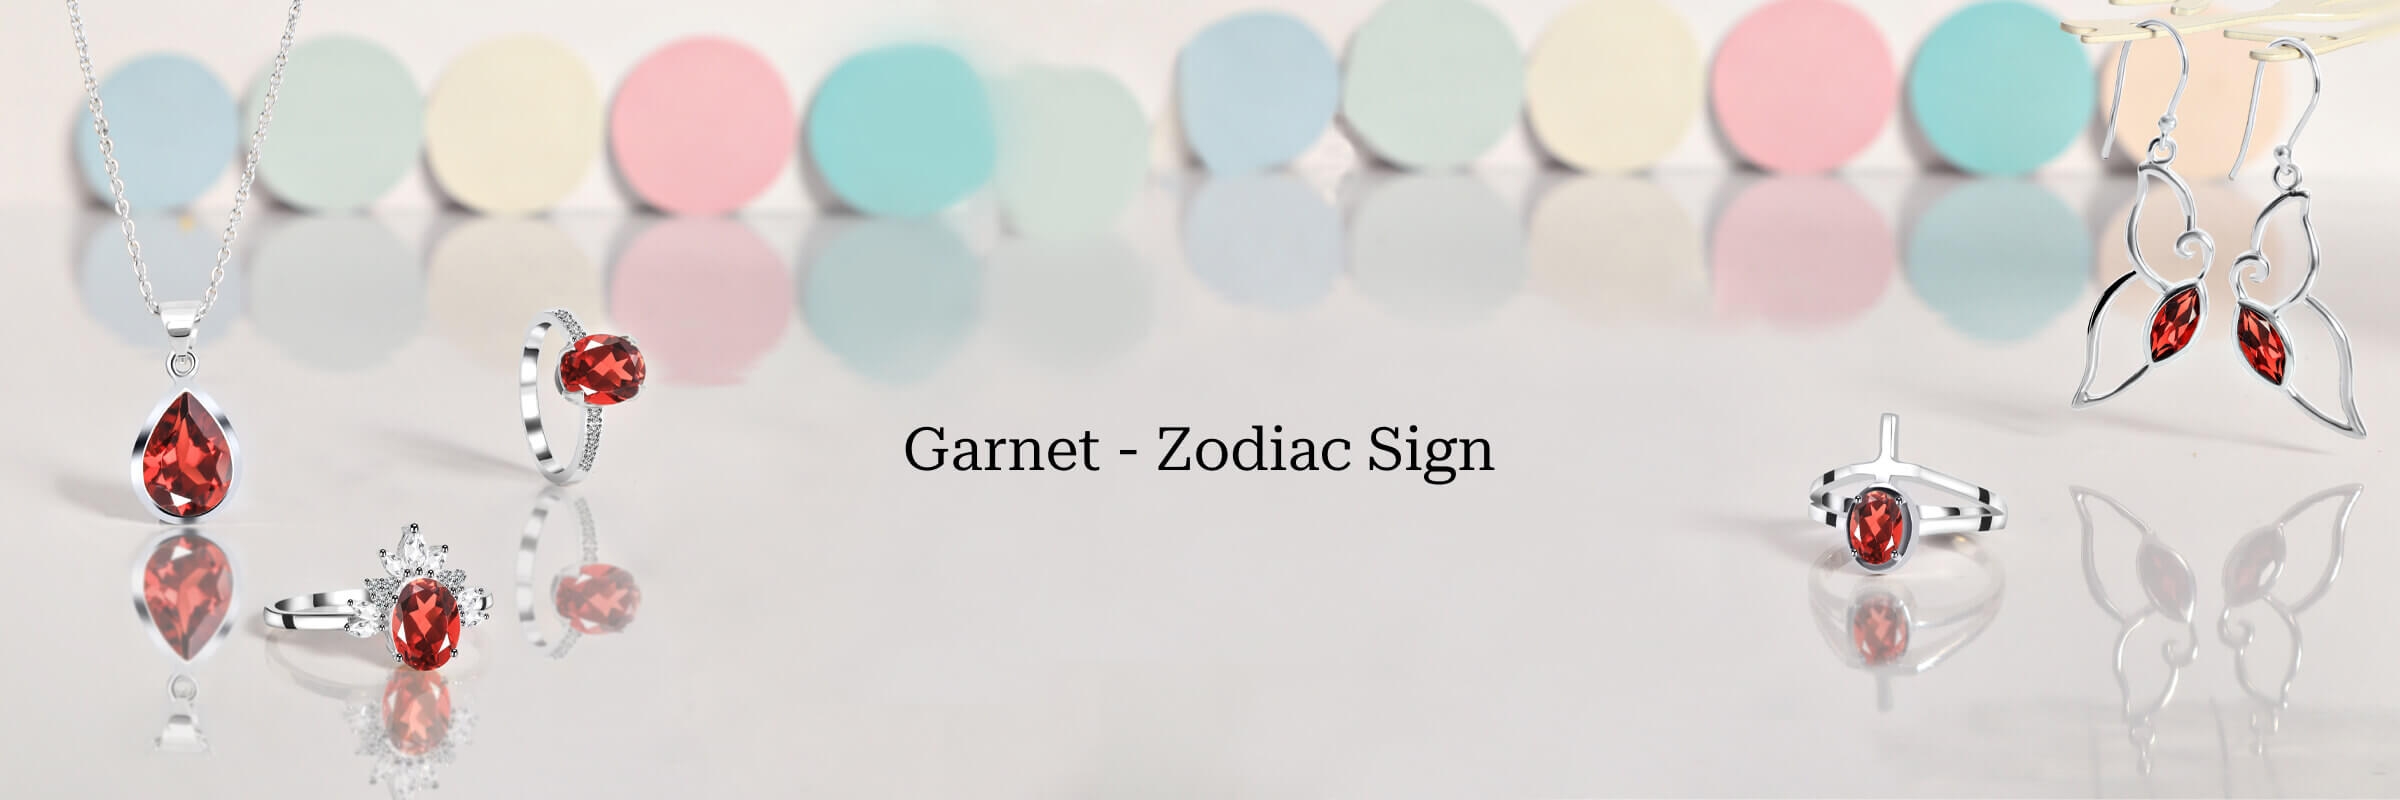 Zodiac Sign Of Garnet